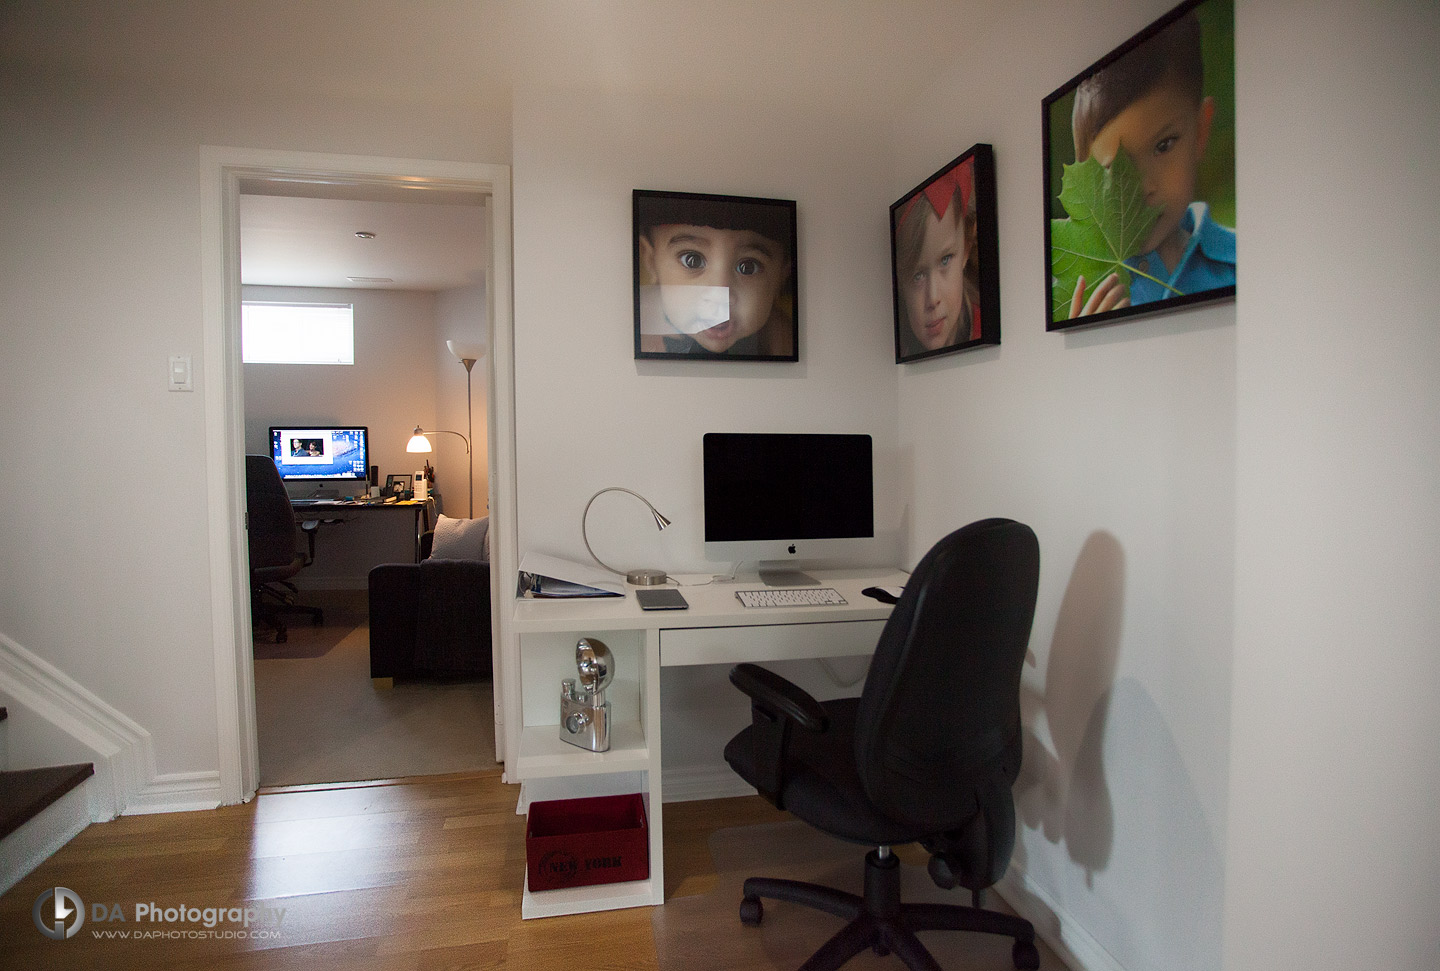 DA Photo Studio - Studio Manager Desk - Children Wall Display